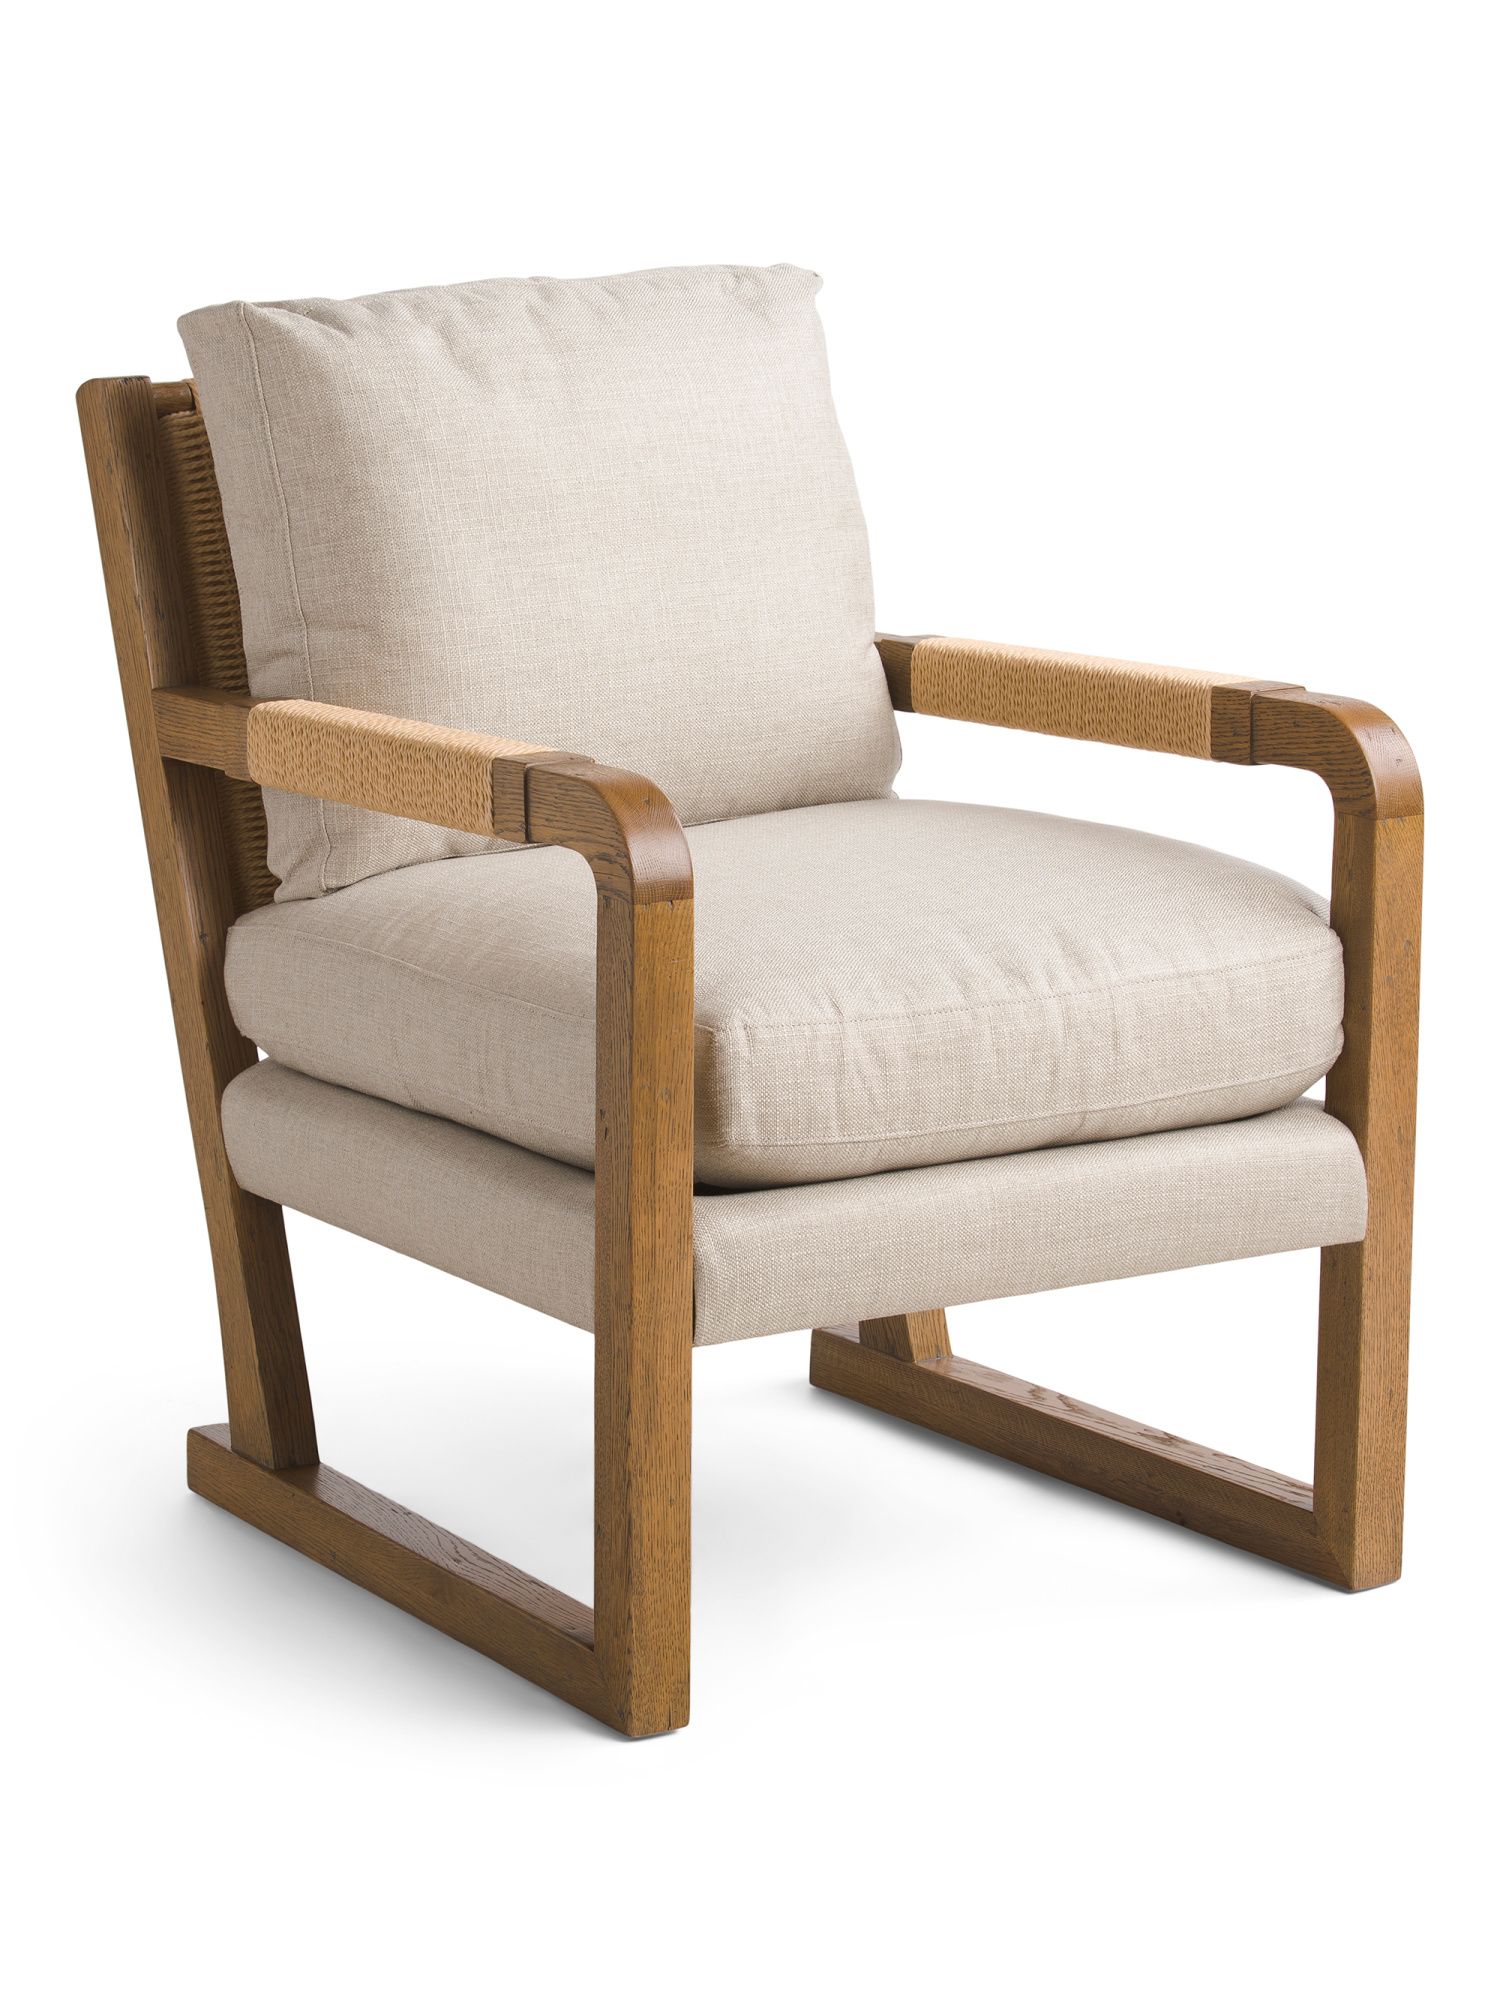 Cabell Upholstered Chair | Marshalls